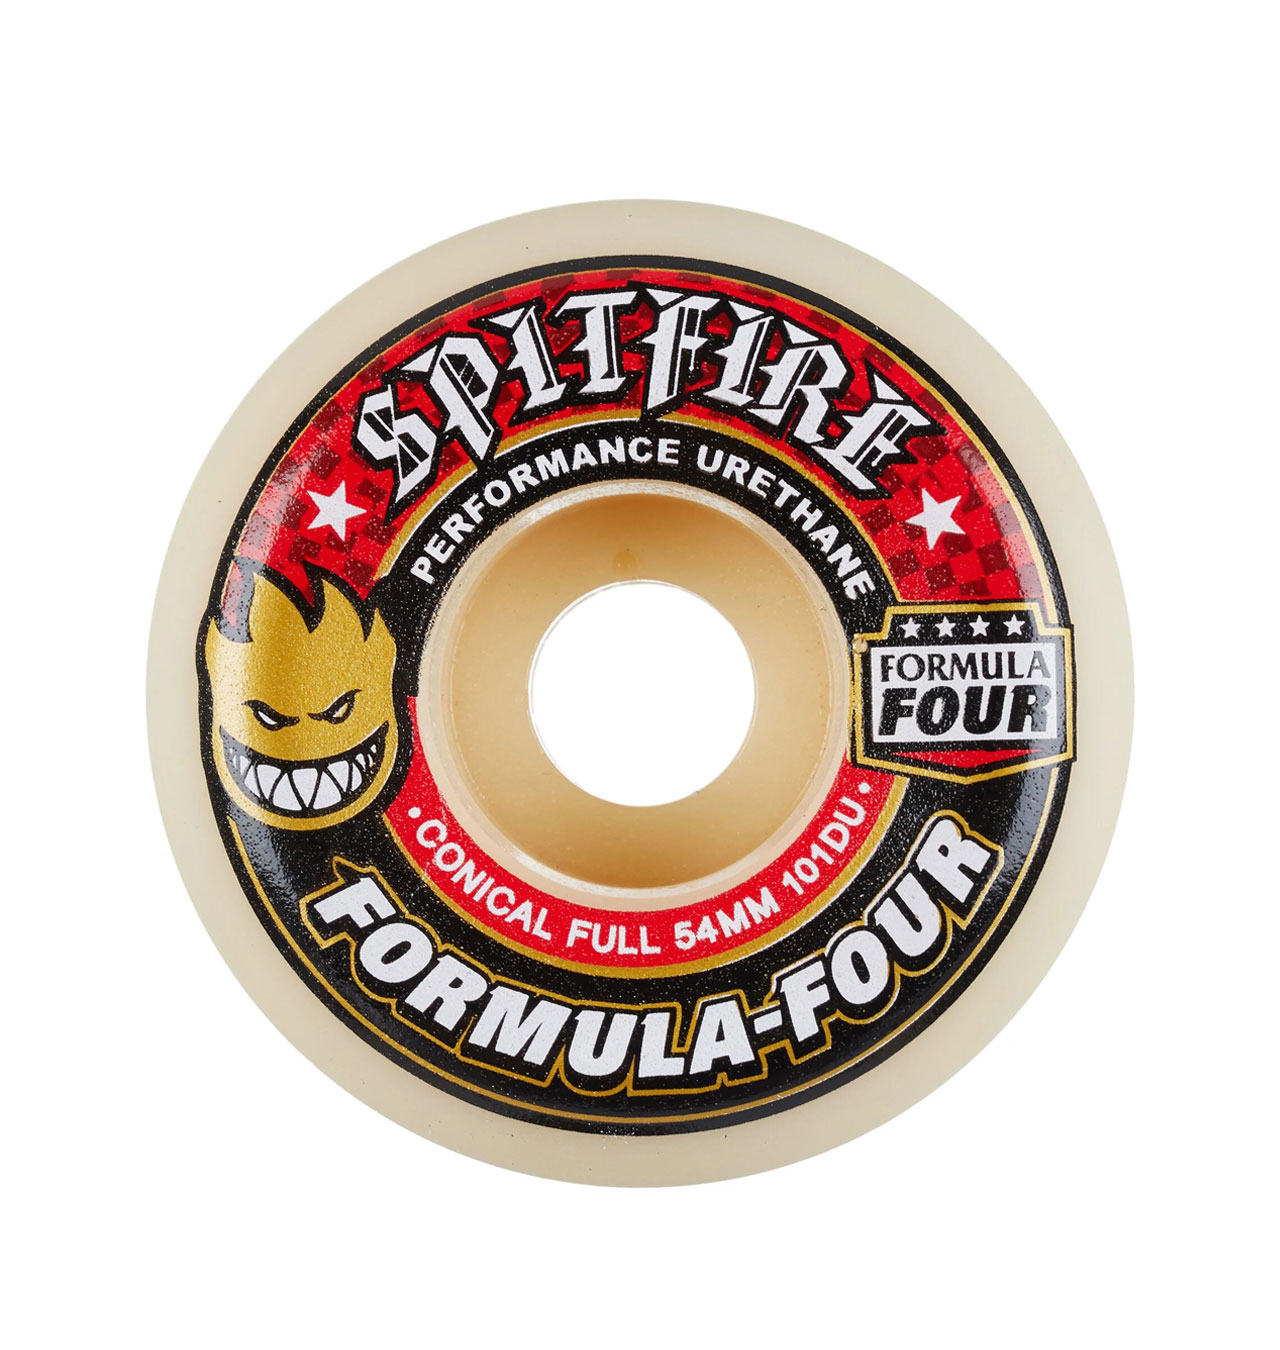 Spitfire - Formula Four Conical Full 101DU Skateboard Wheels - 52mm